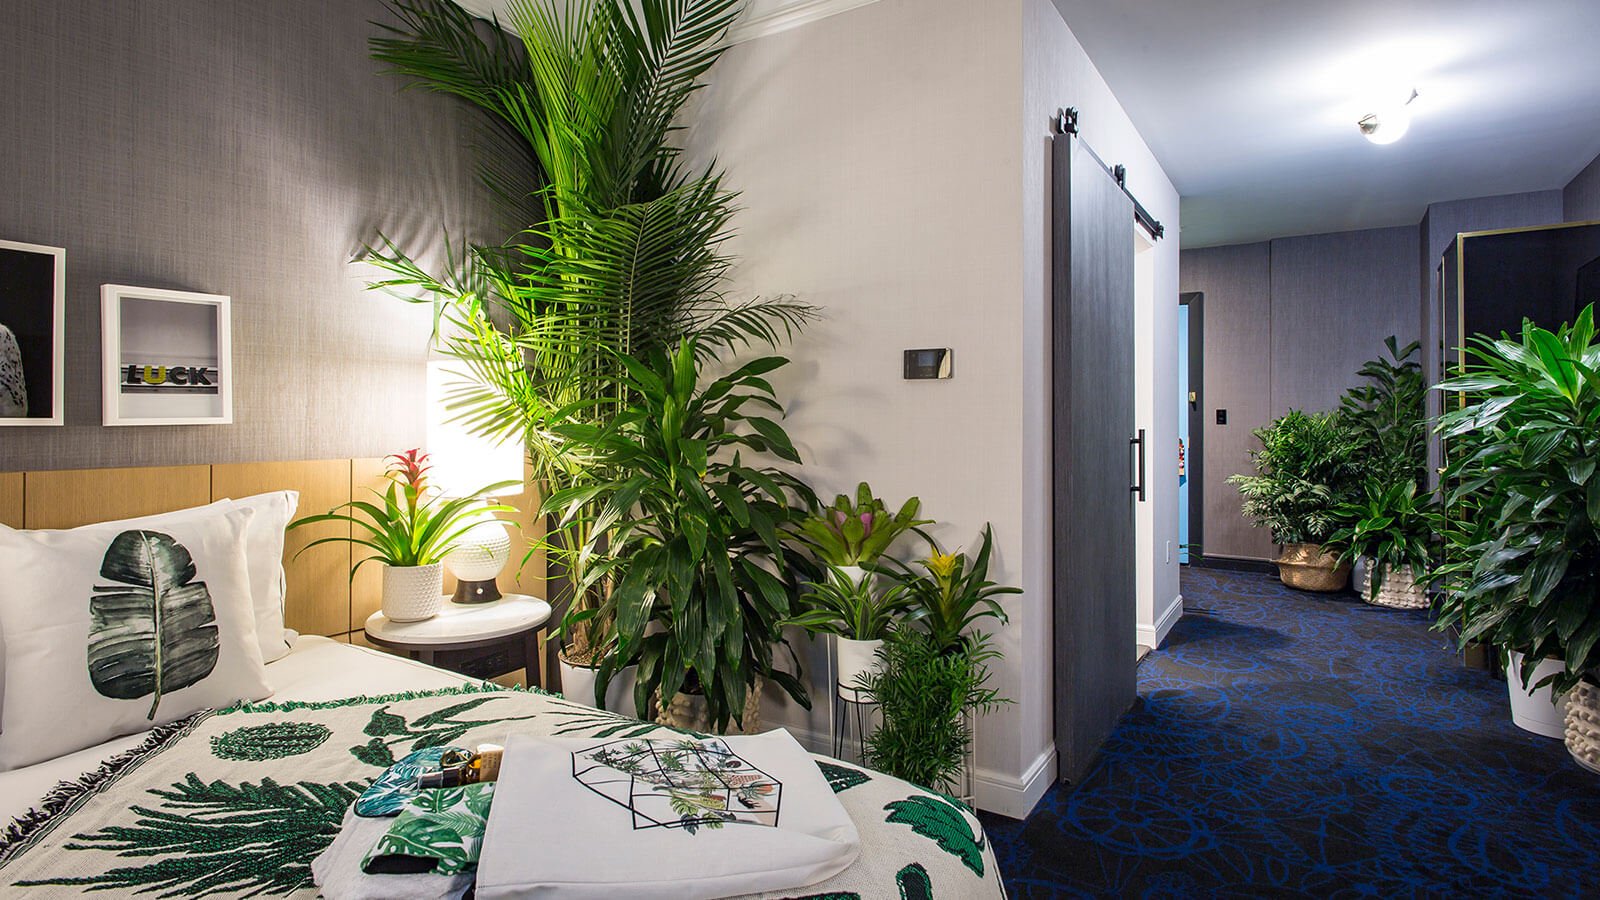 Комната без растений. Комната с растениями. Озеленение гостиной. Озеленение гостиниц. Растения в интерьере.